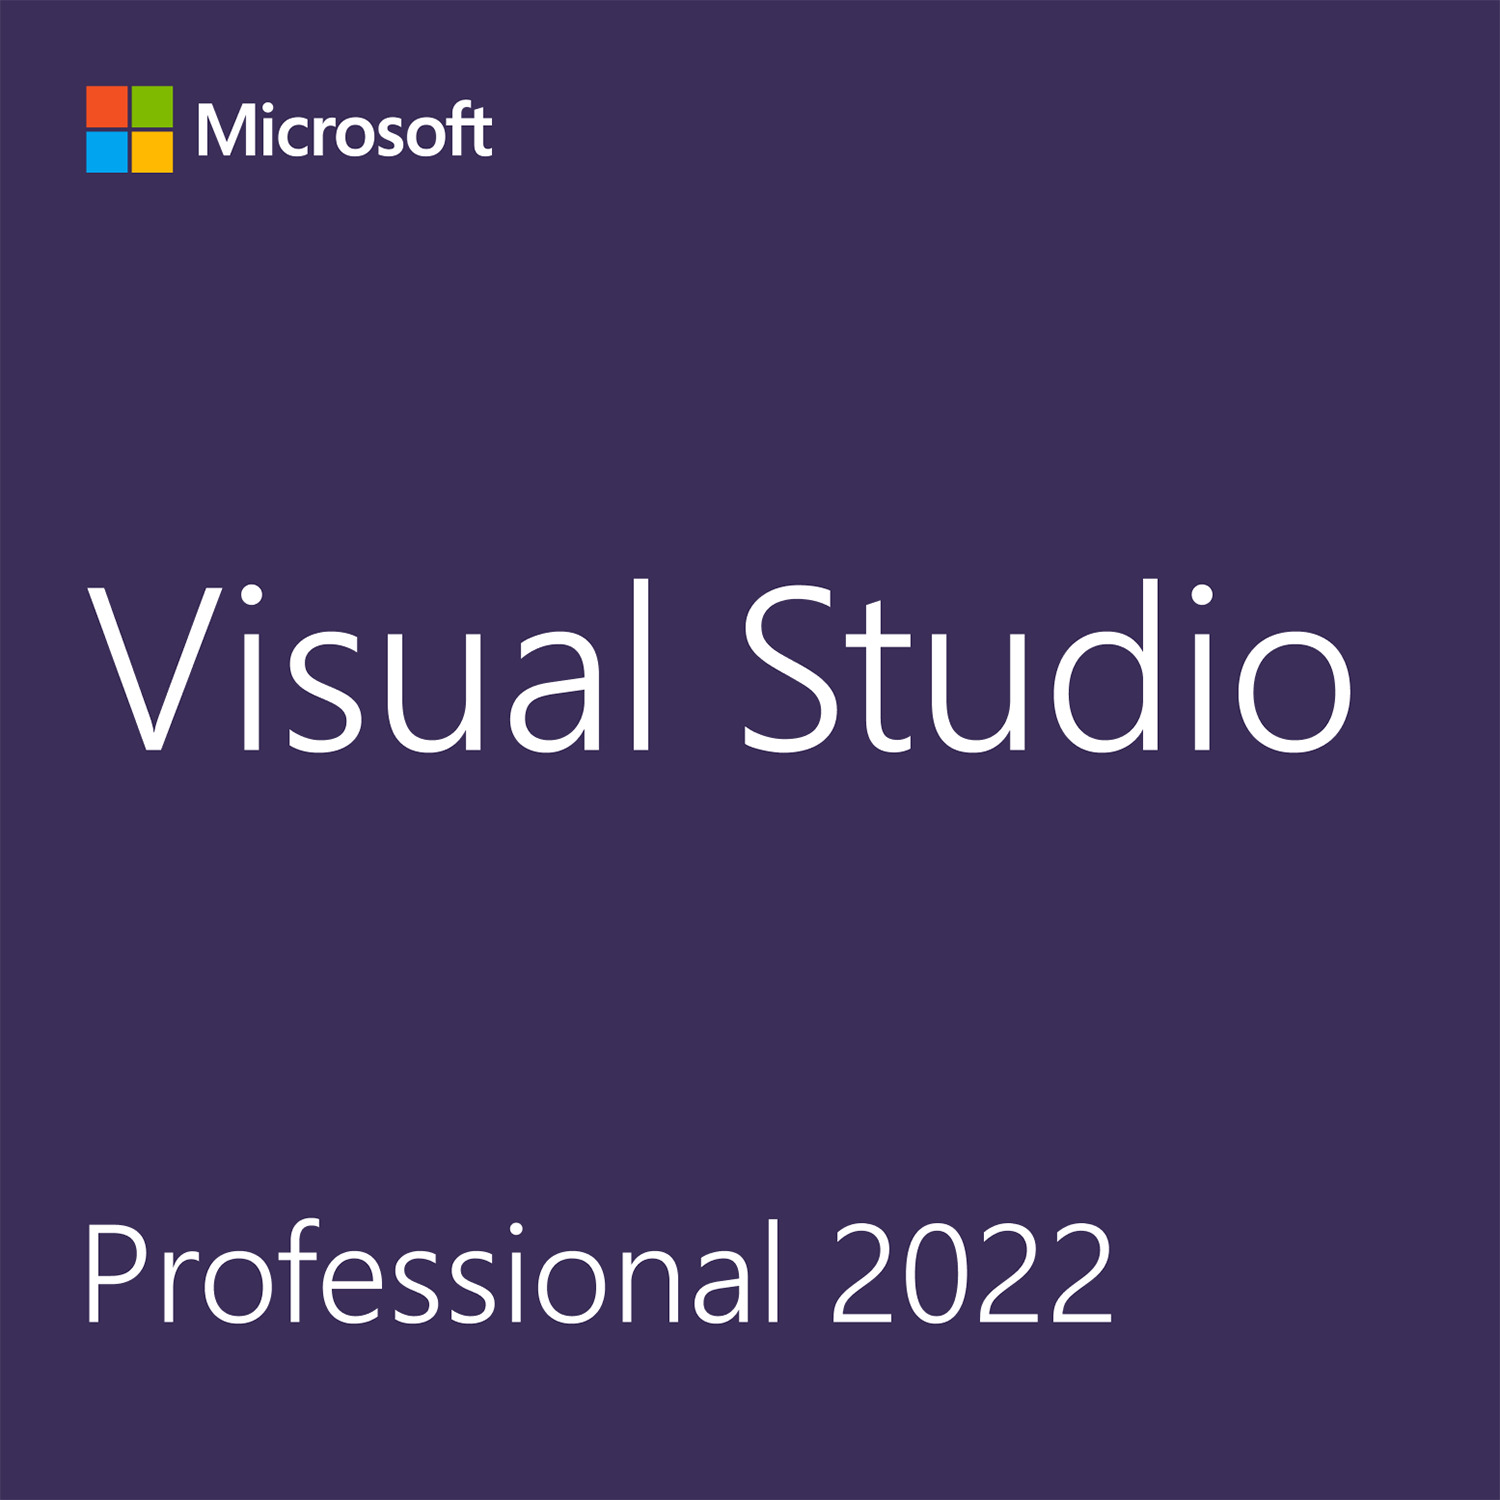 Microsoft Visual Studio 2022 Professional Edition